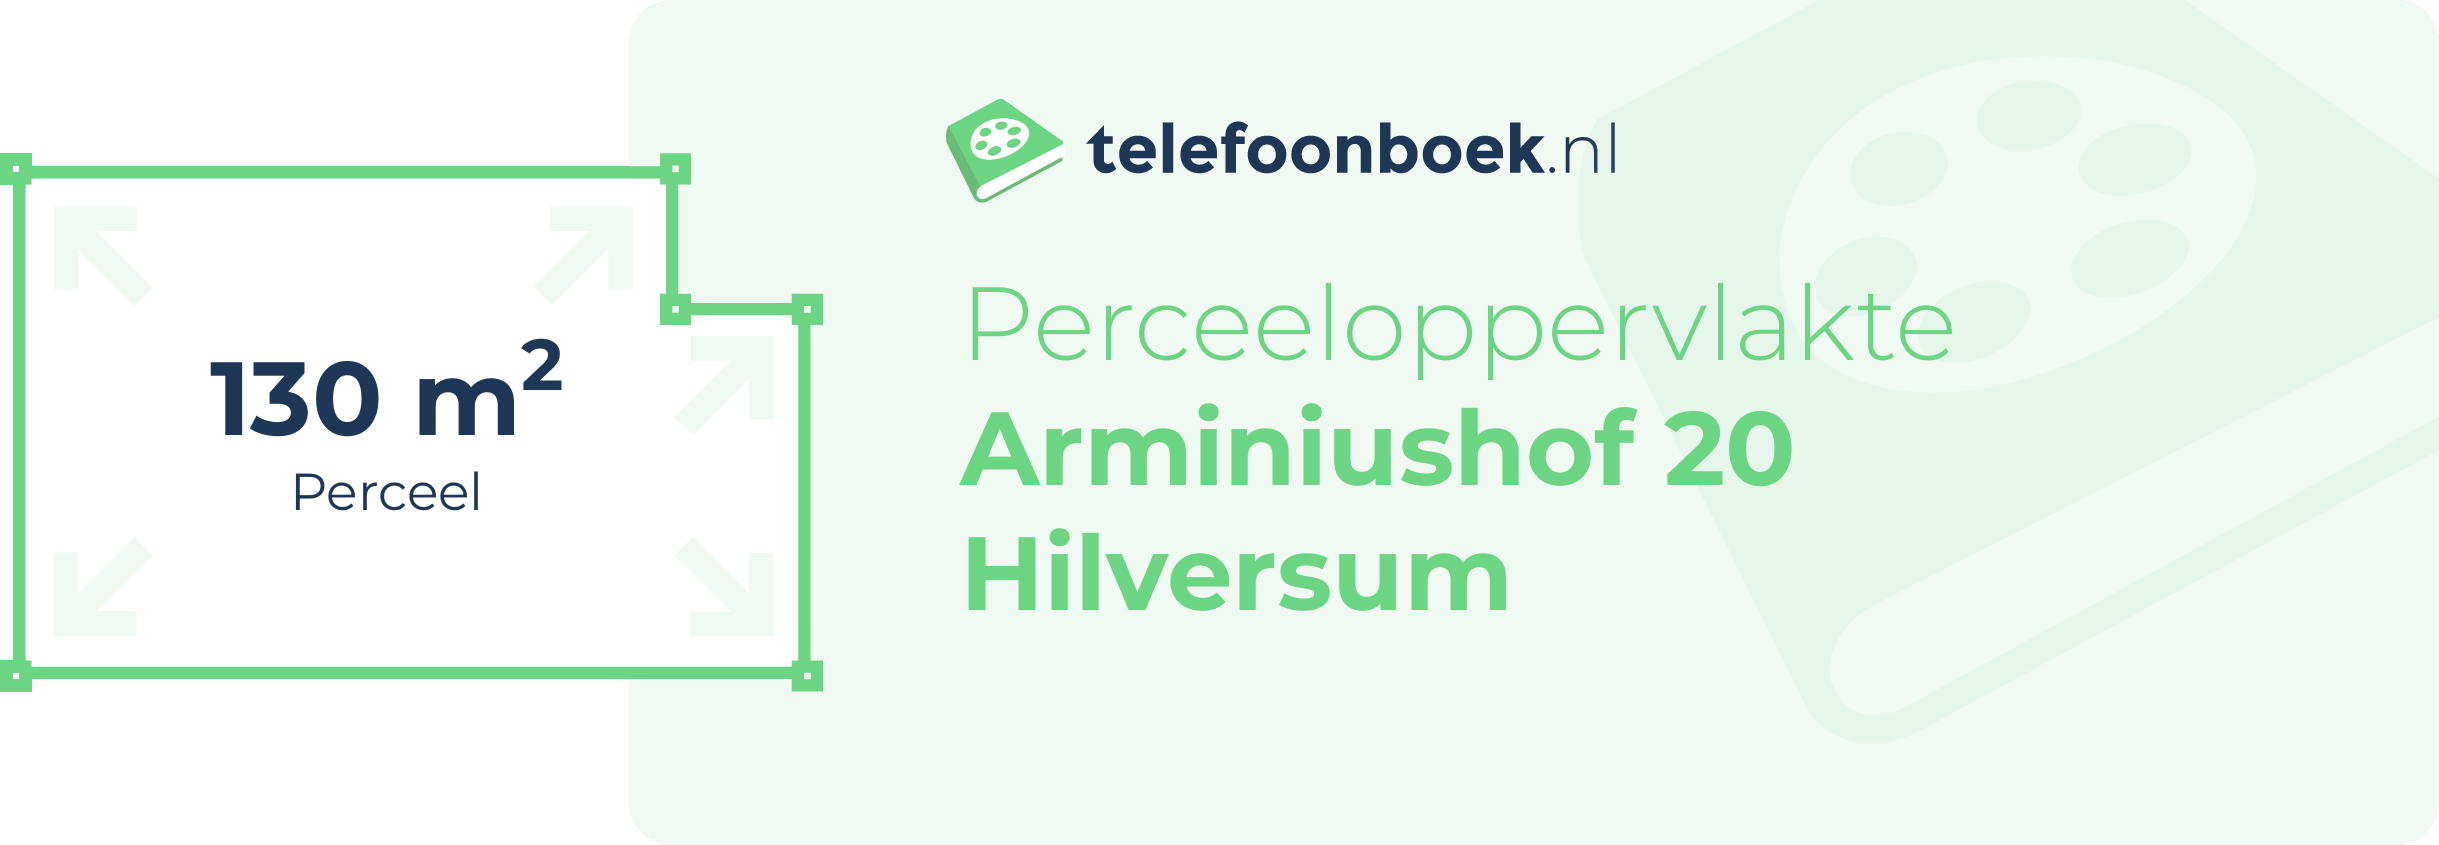 Perceeloppervlakte Arminiushof 20 Hilversum